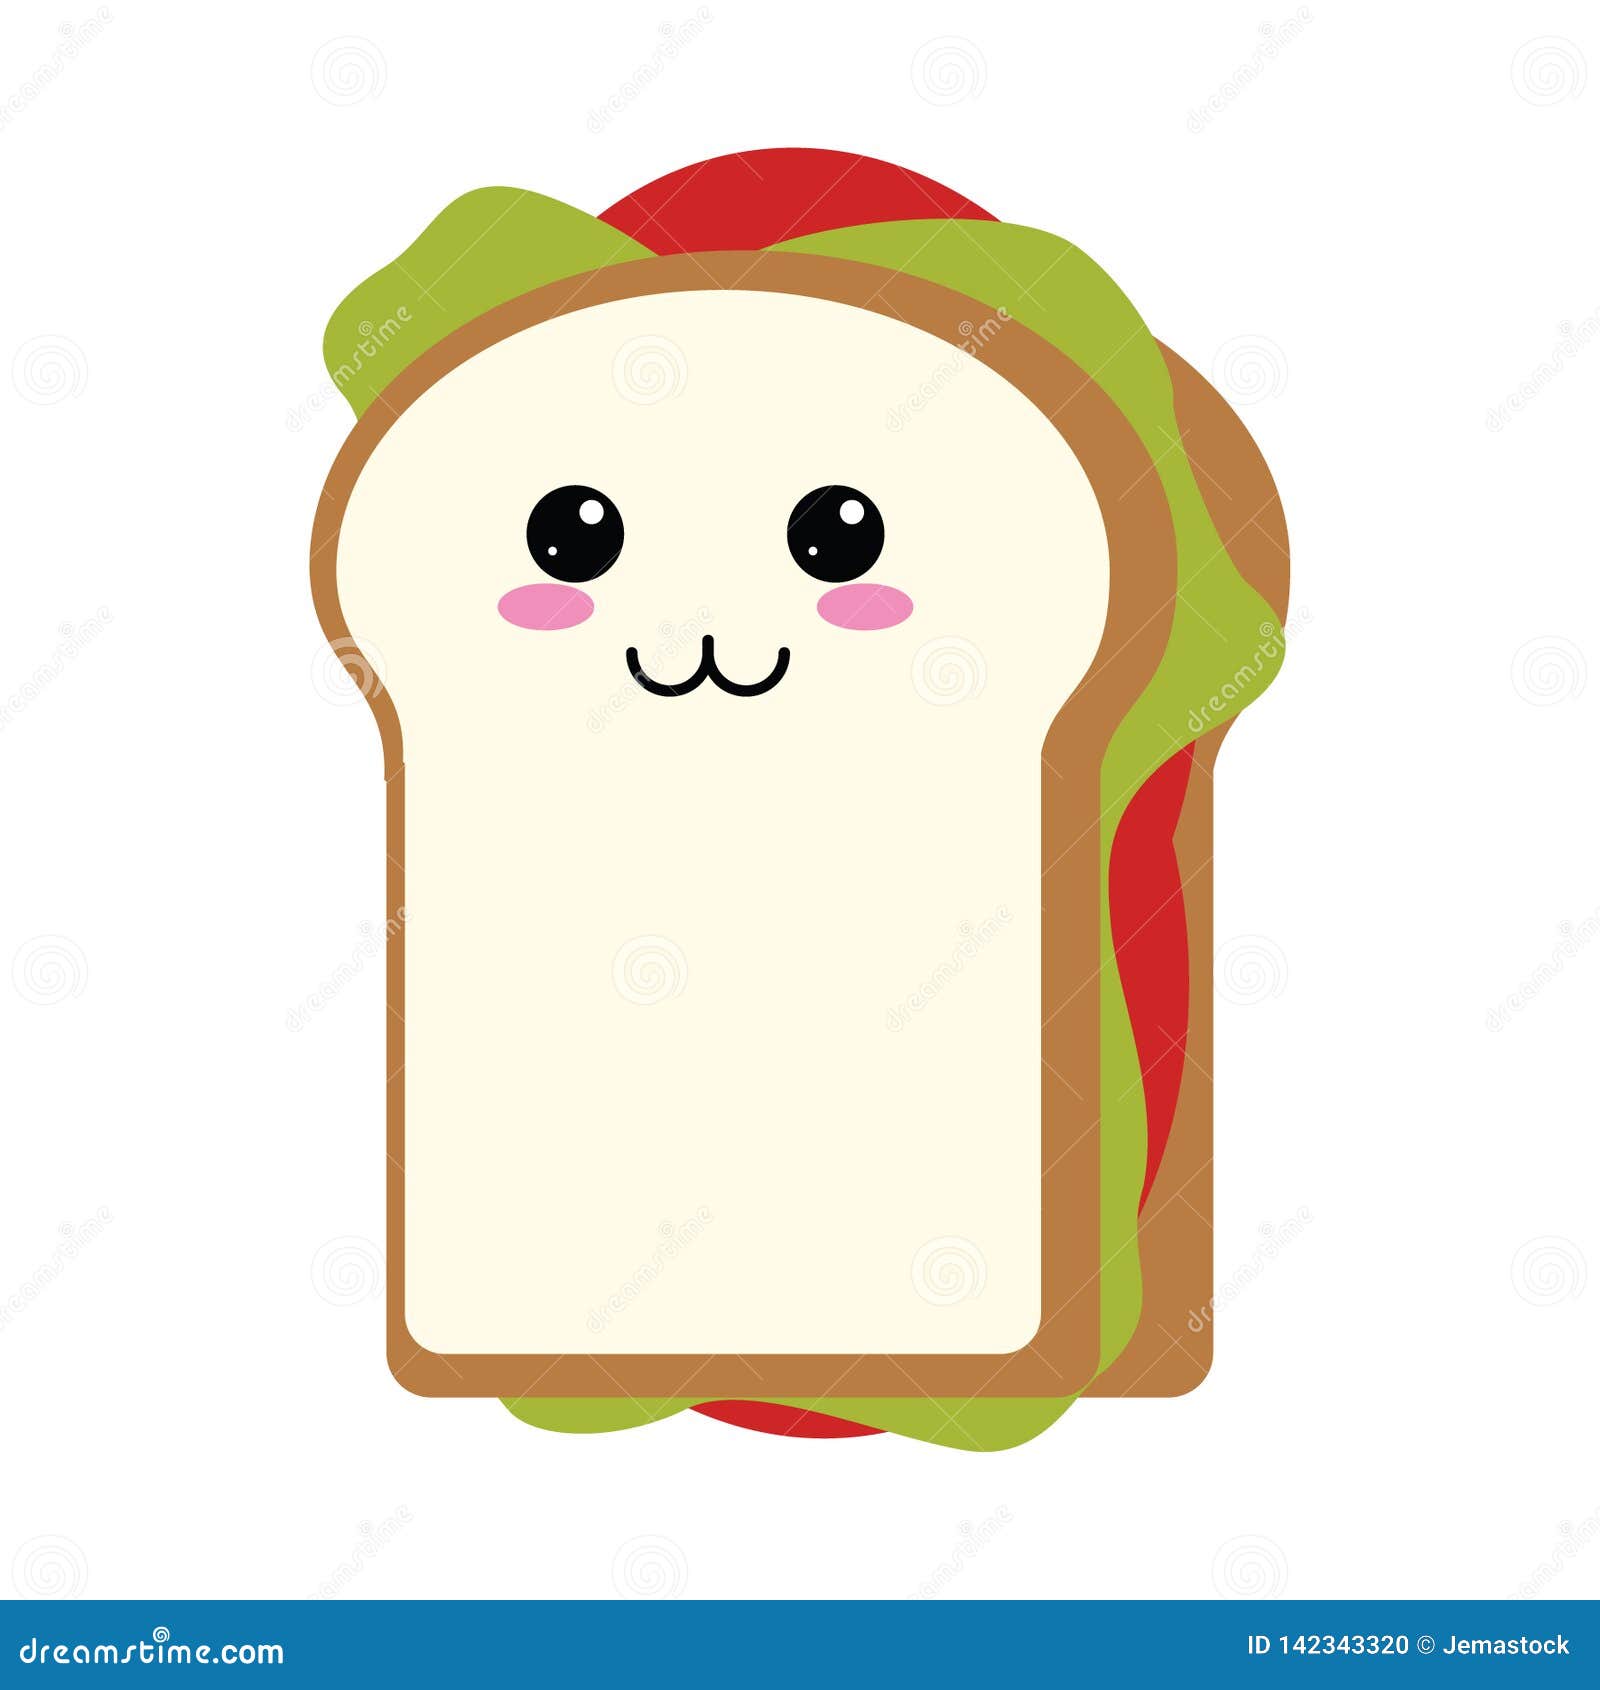 Pin on bread